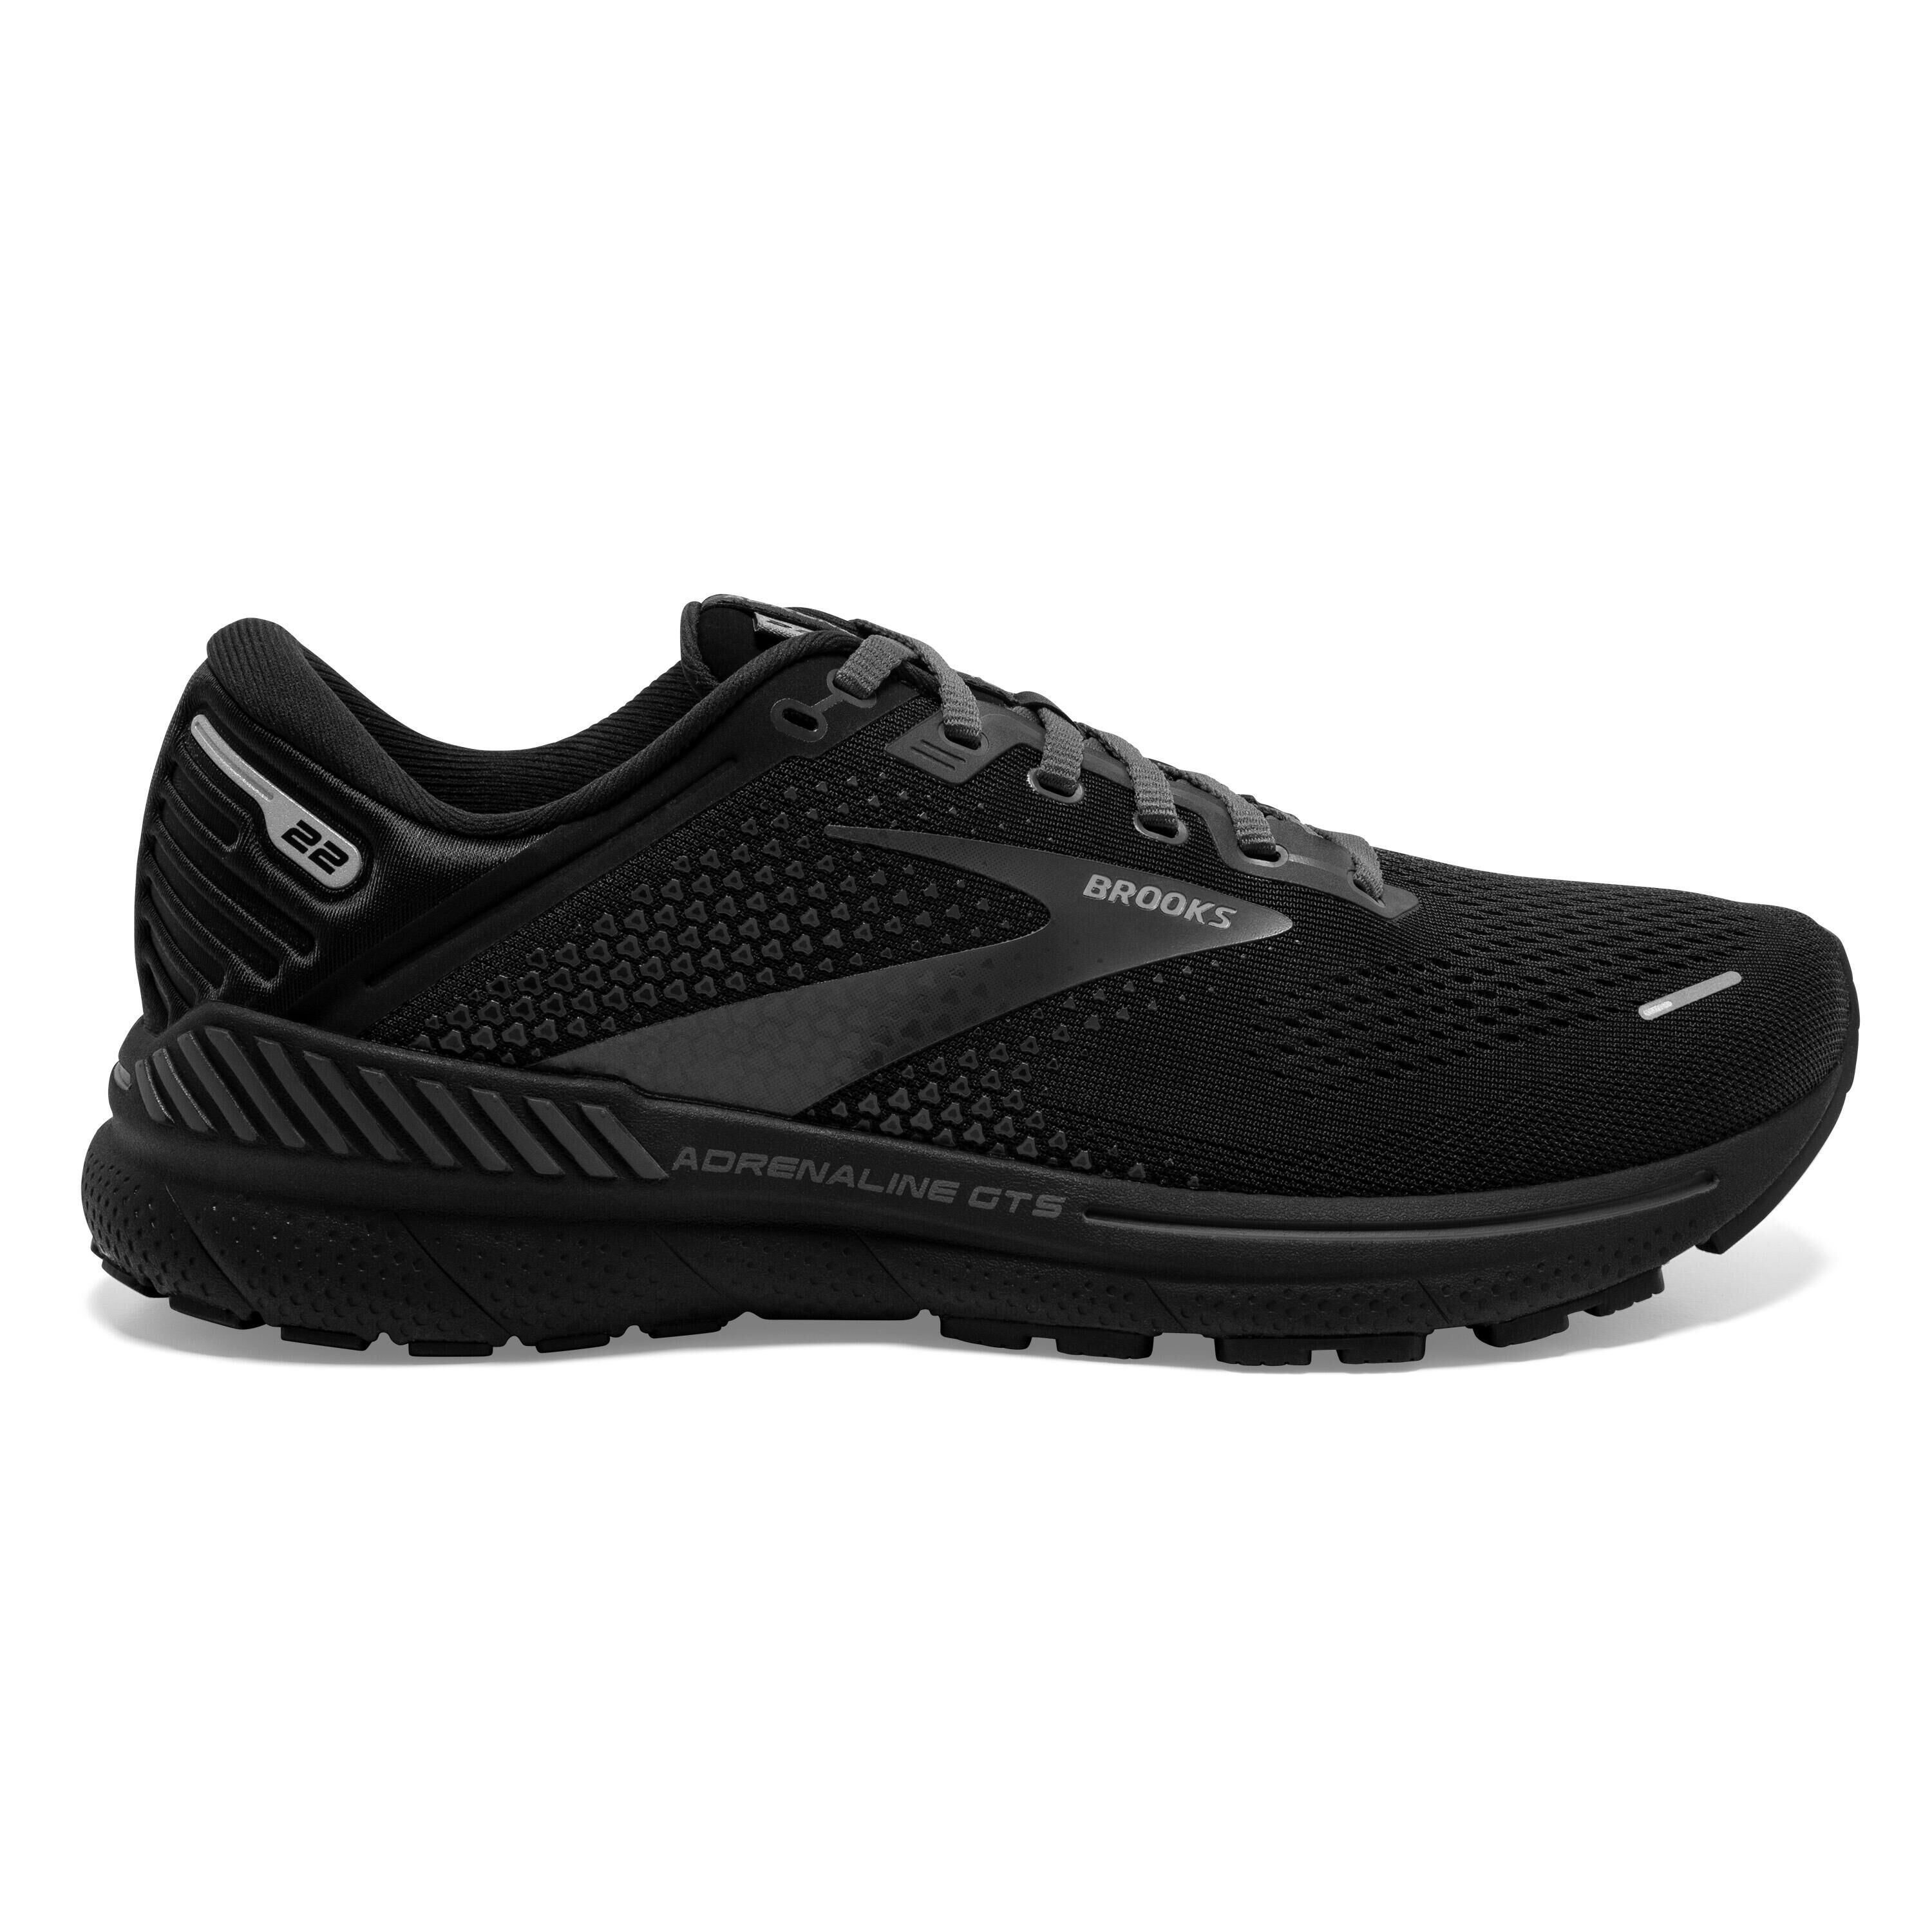 BROOKS Brooks Adrenaline GTS 22 Mens Running Shoes Black